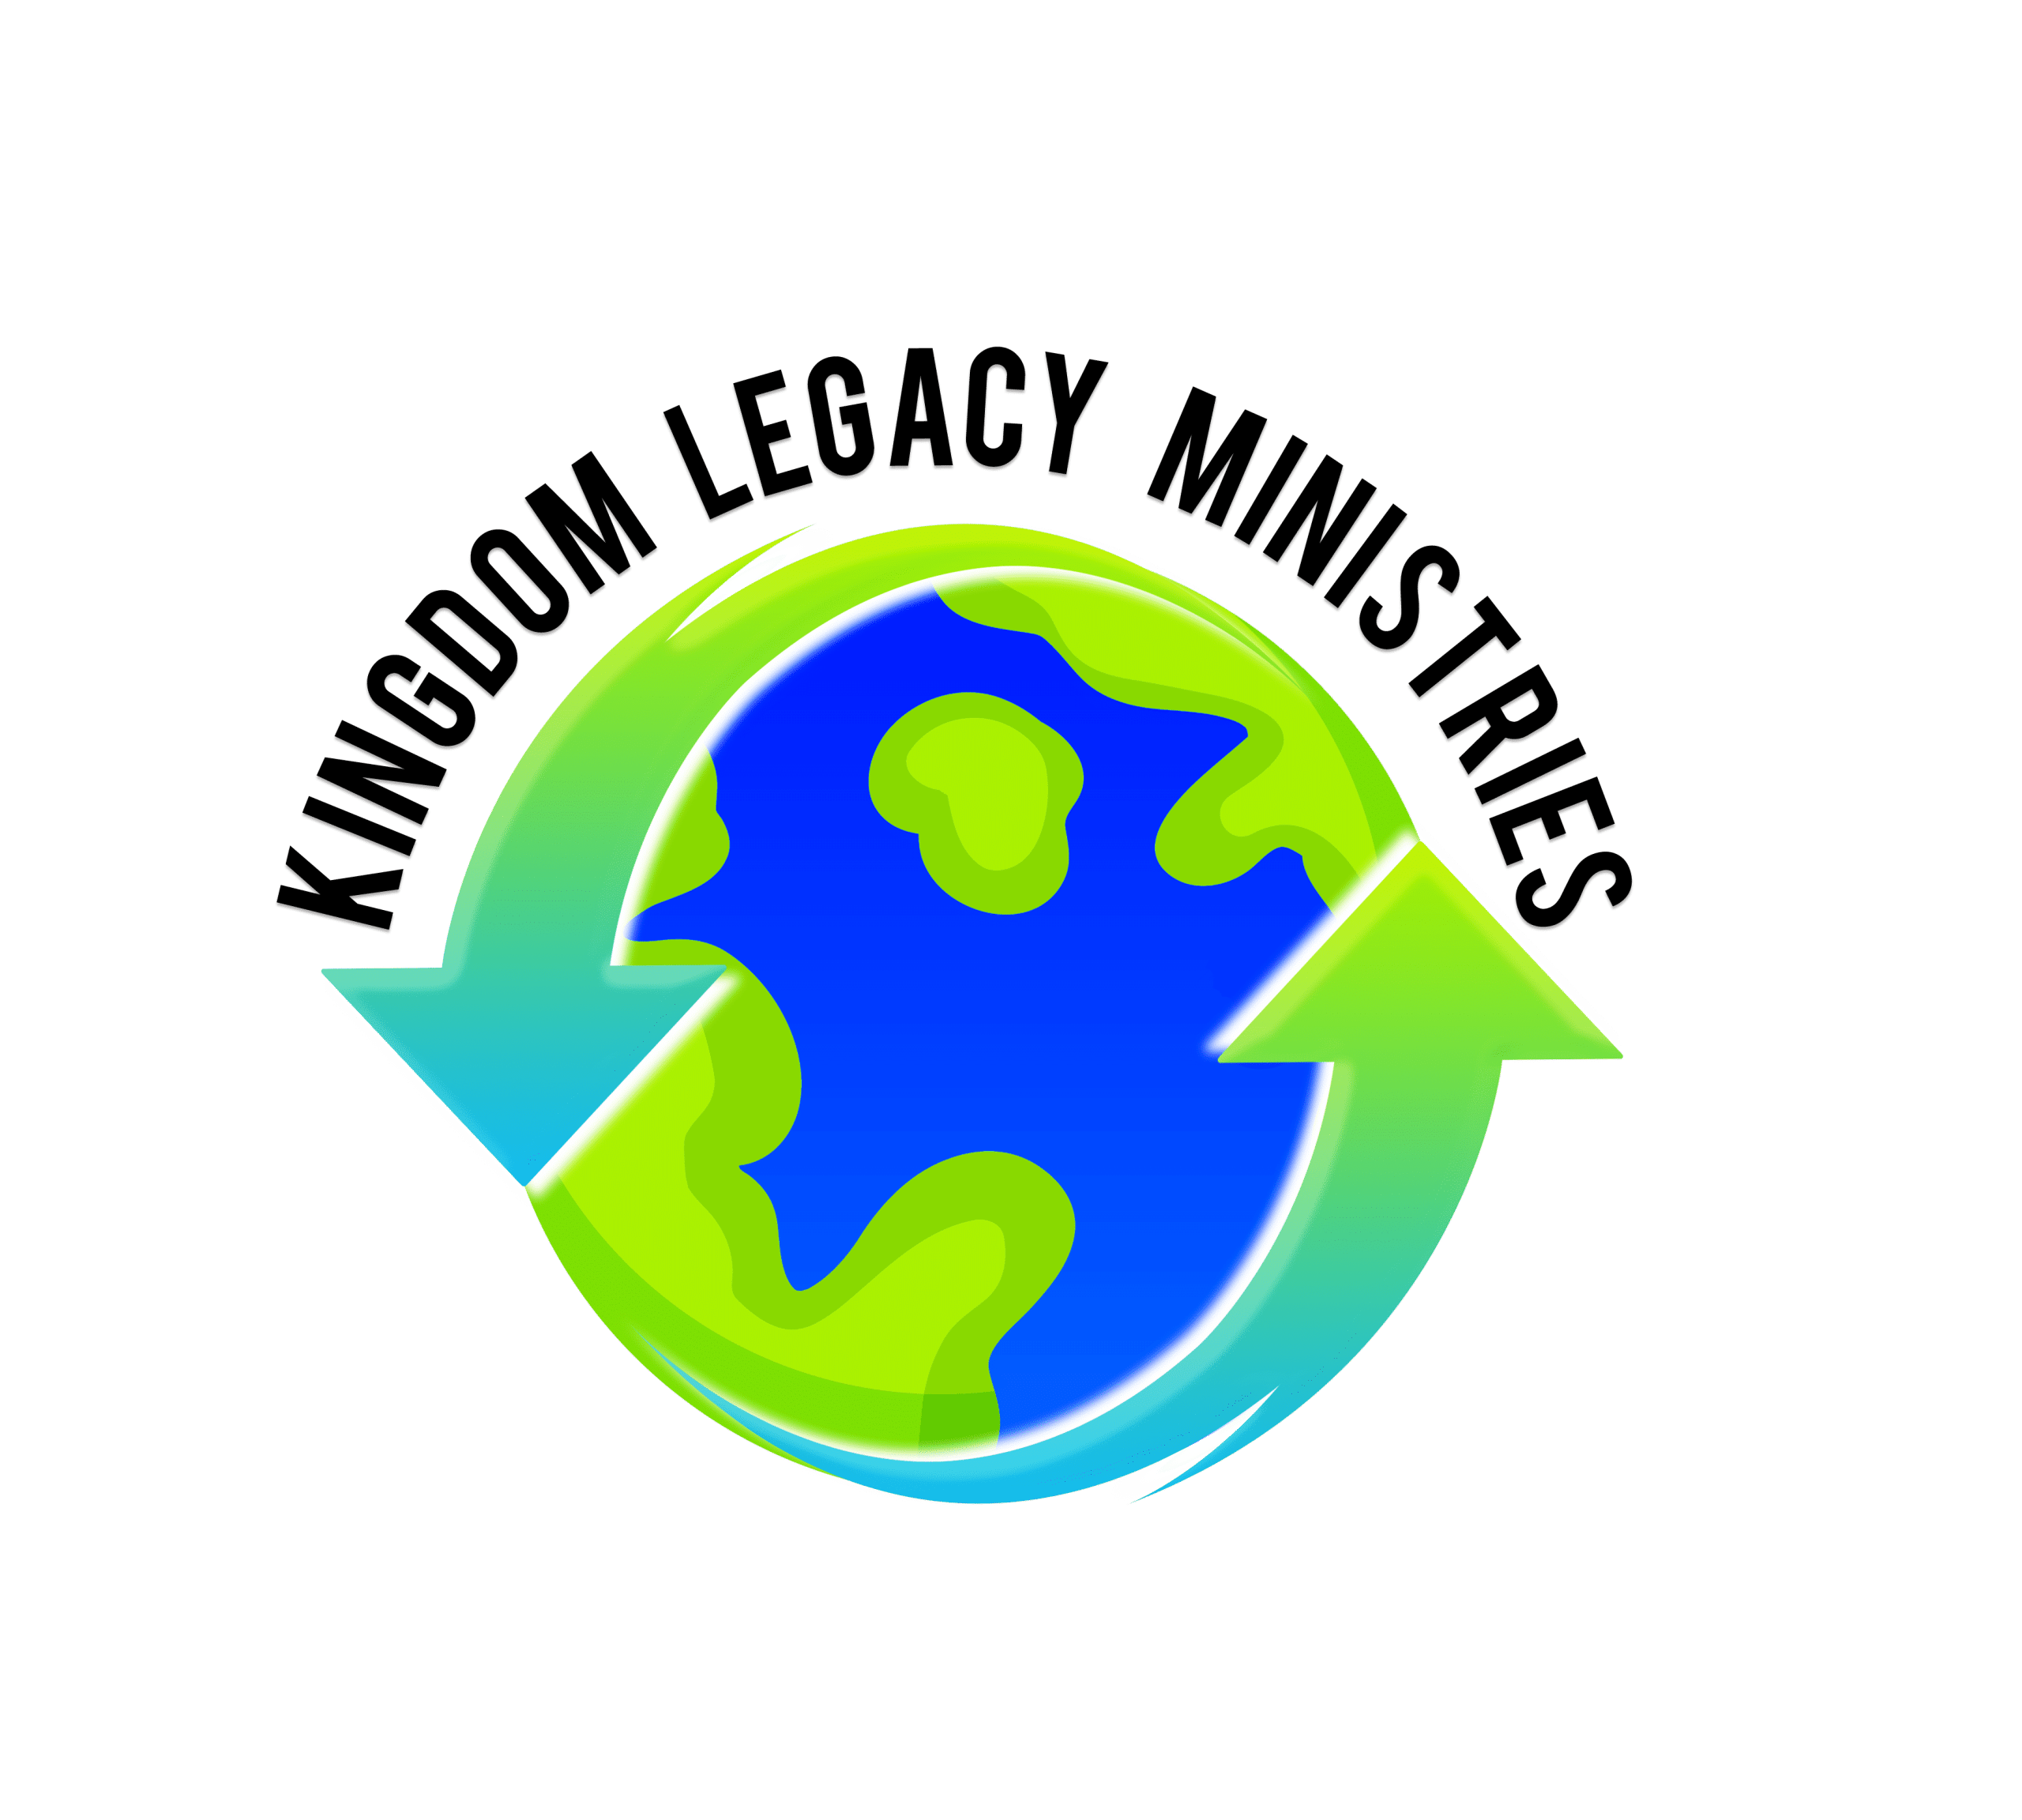 Philippines Kingdom Legacy Ministries